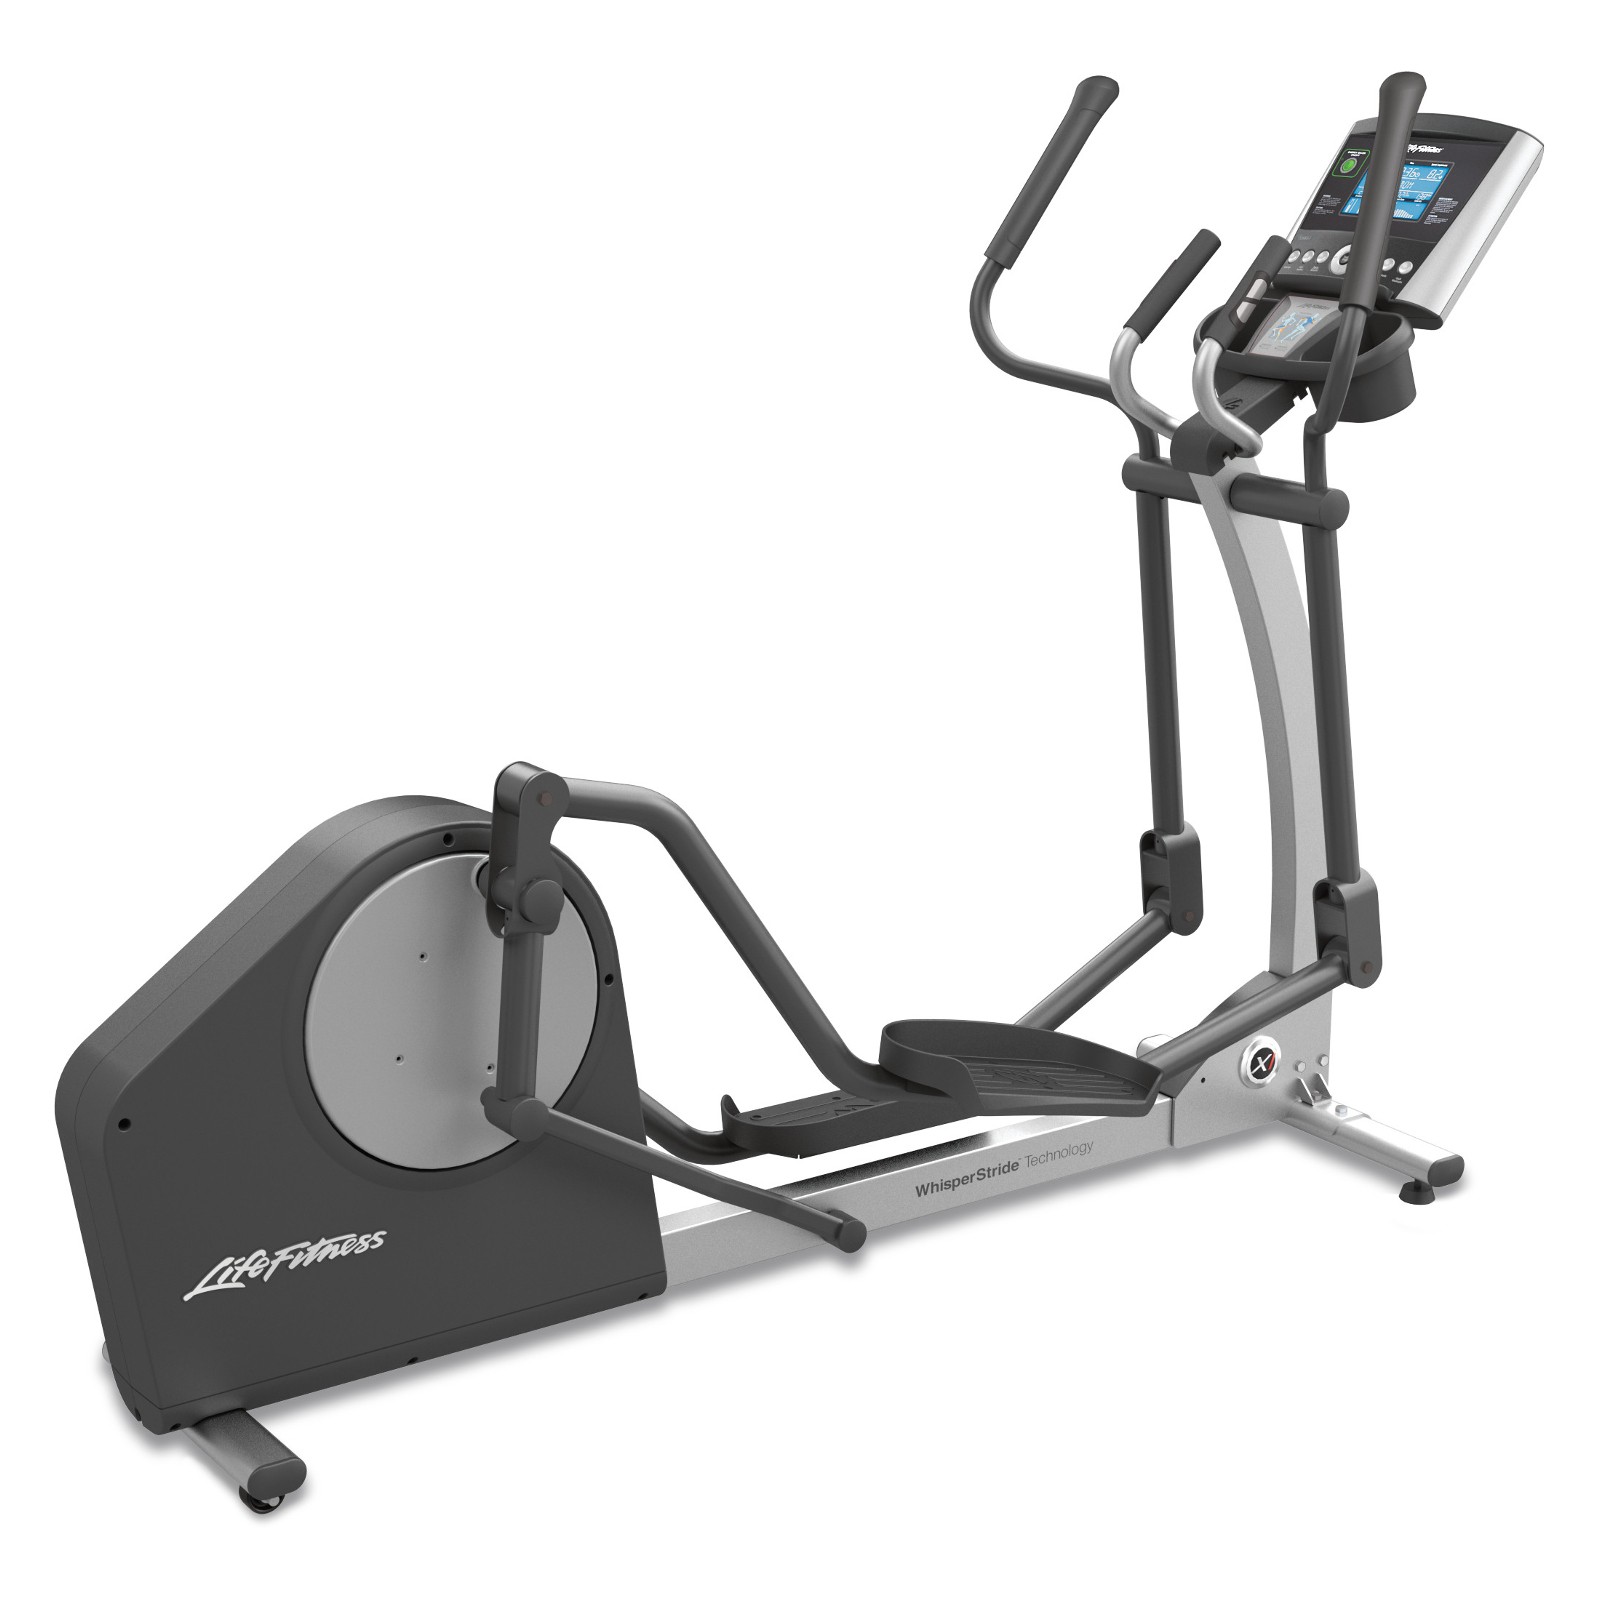 hiërarchie Varken Alvast Life Fitness elliptical cross trainer X1 Go buy with 504 customer ratings -  Fitshop